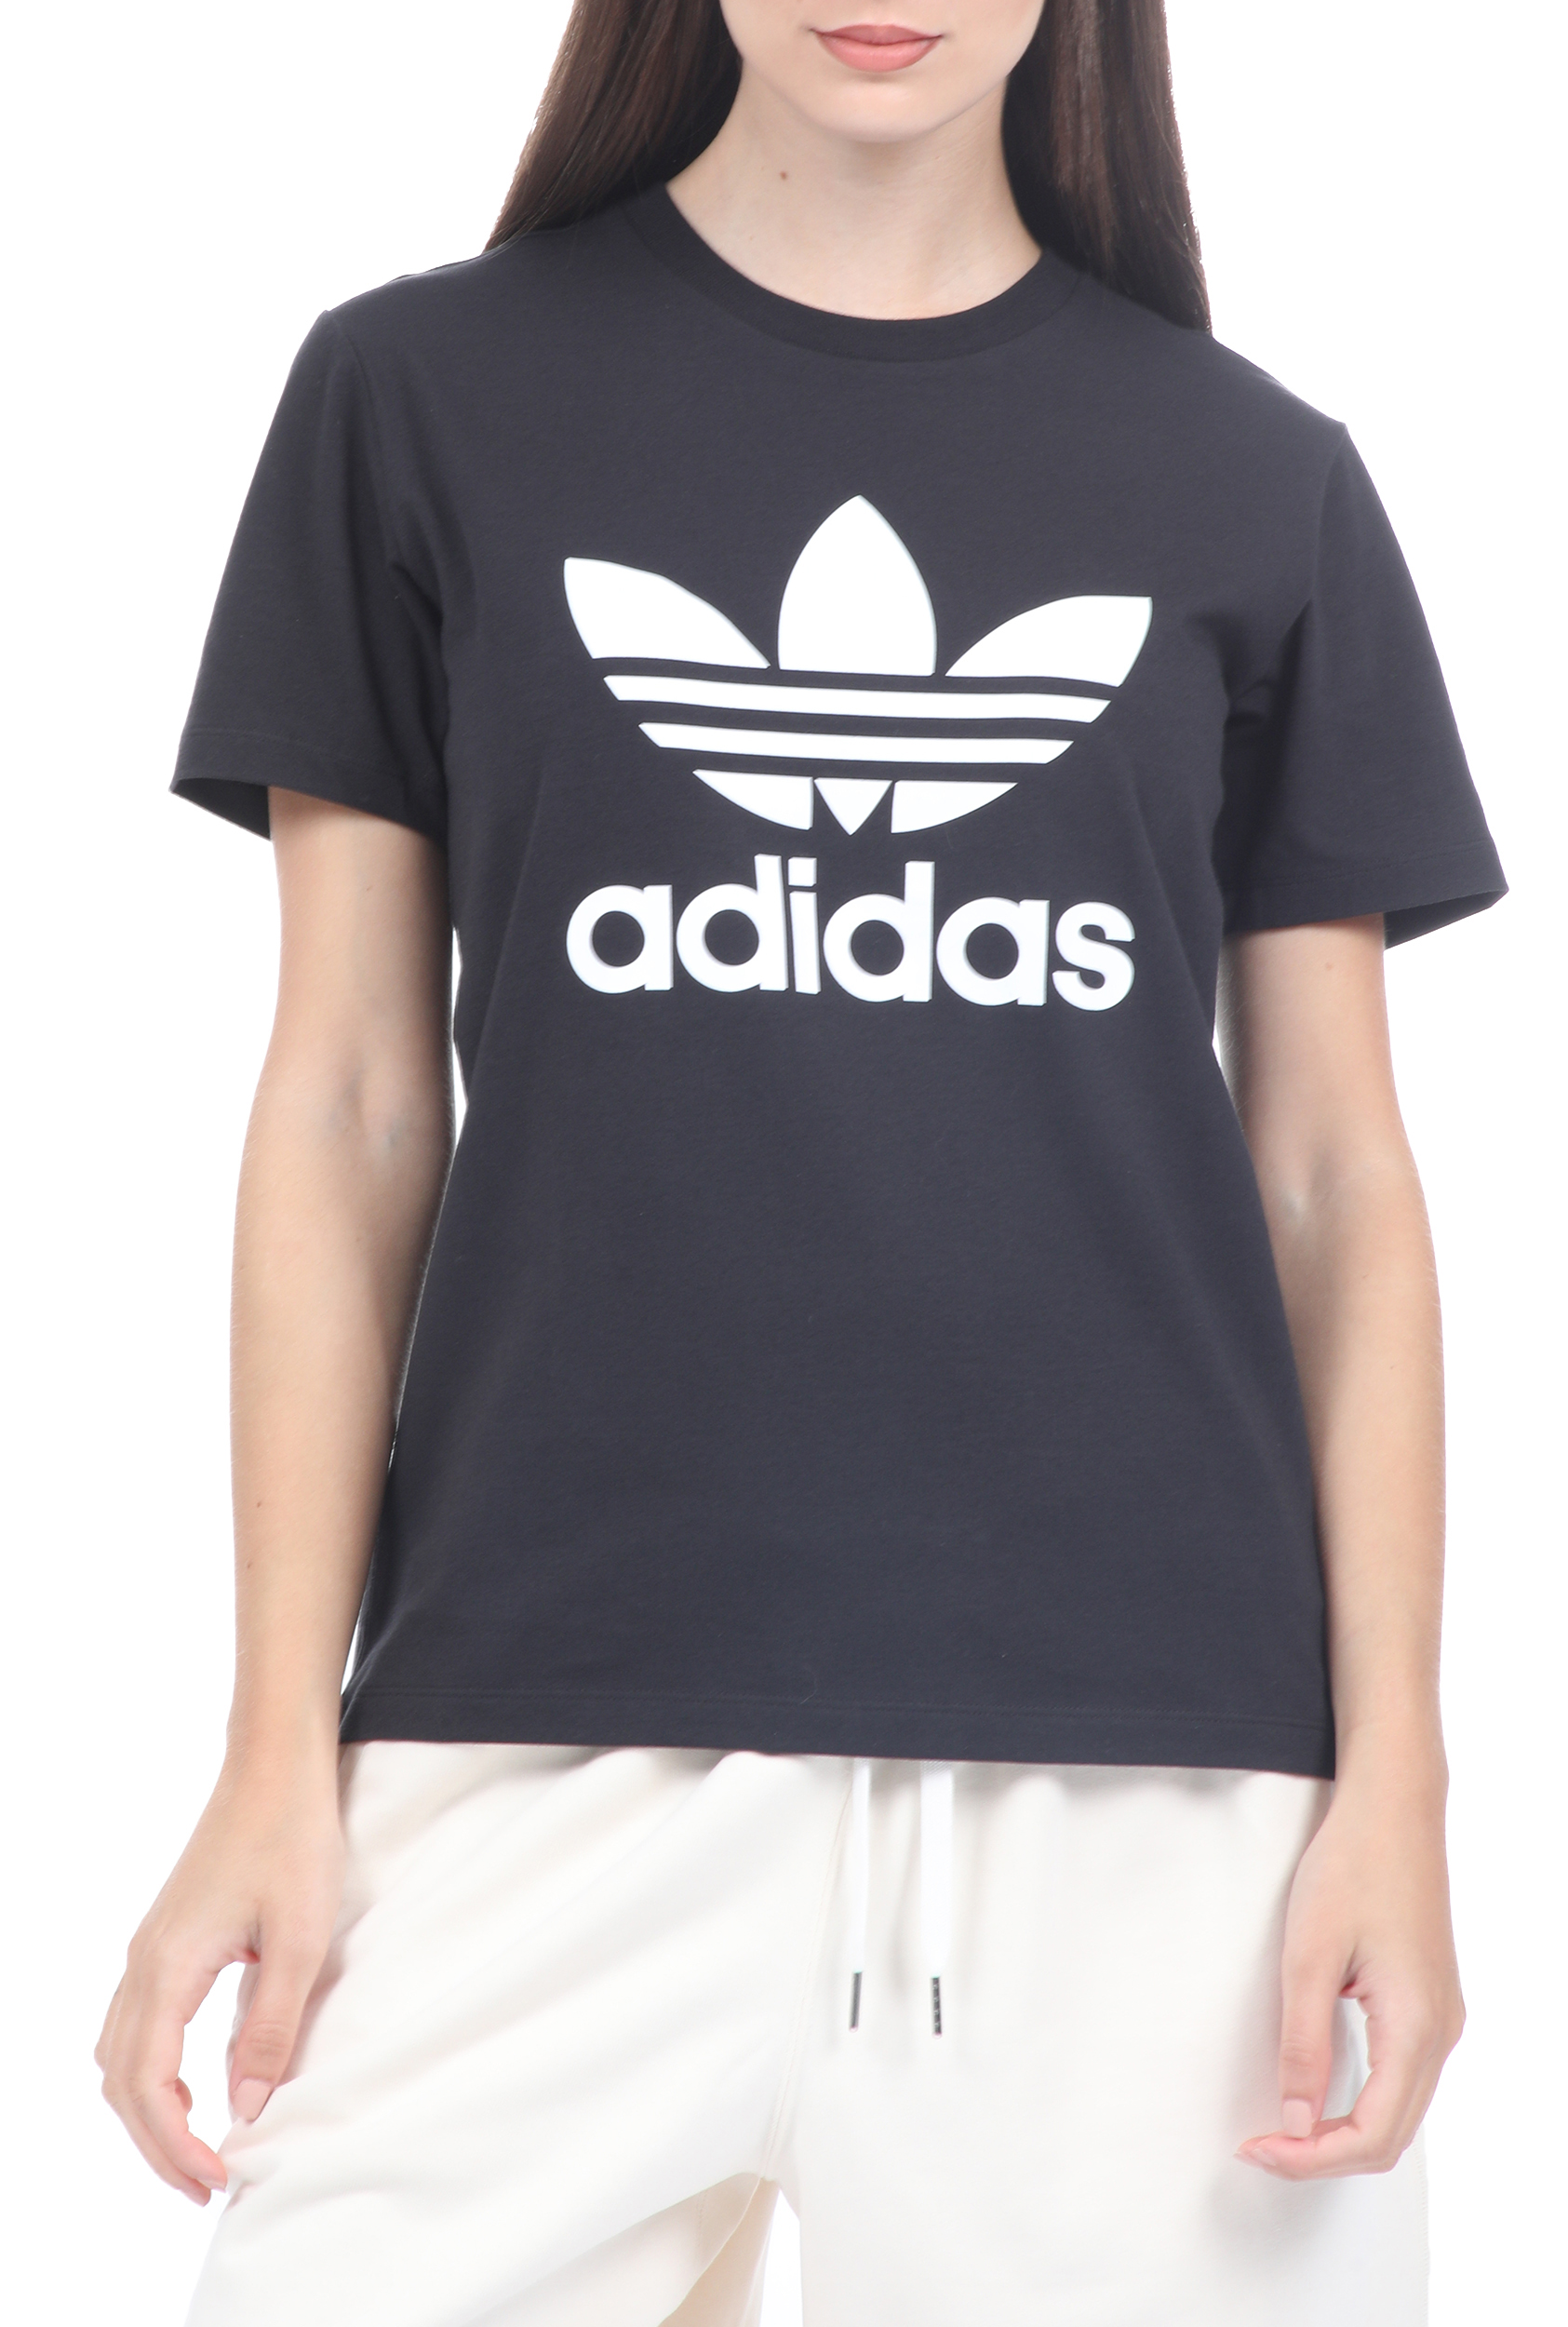 adidas Originals – Γυναικεία κοντομάνικη μπλούζα Adidas Originals μαύρη 1810711.0-0073